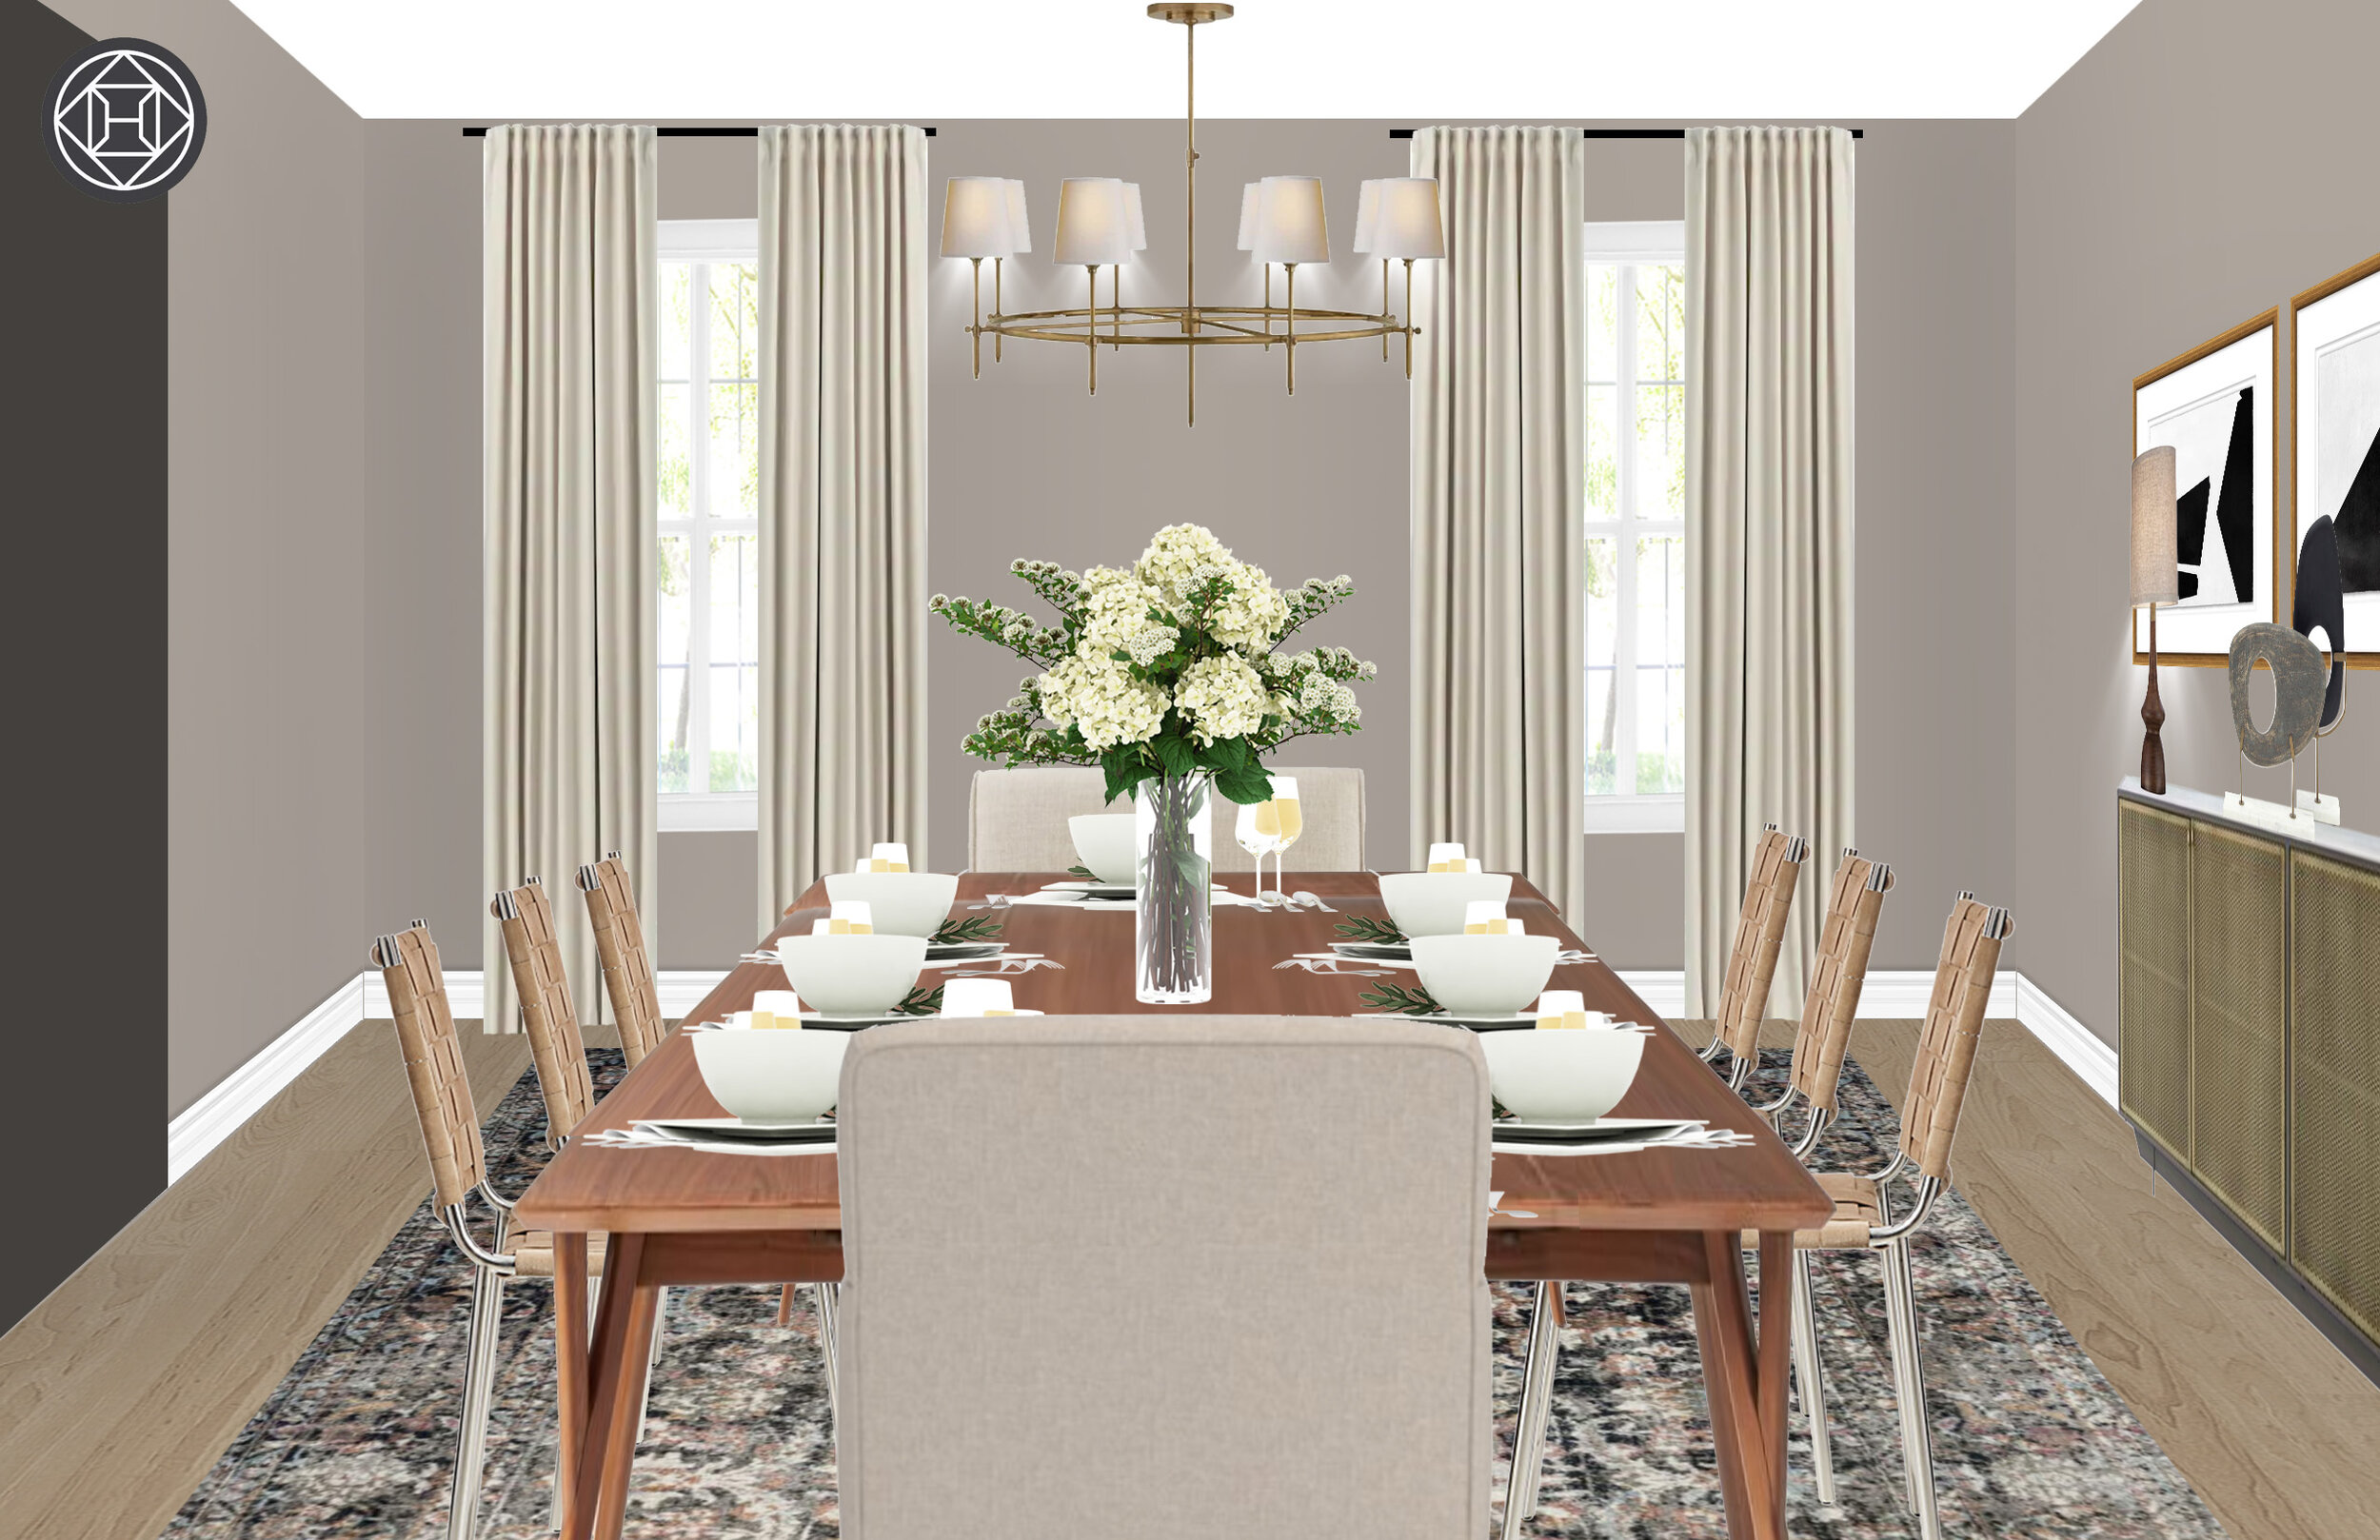 _Layout_Formal Dining Room_Emily LeVasseur-View 2.jpg